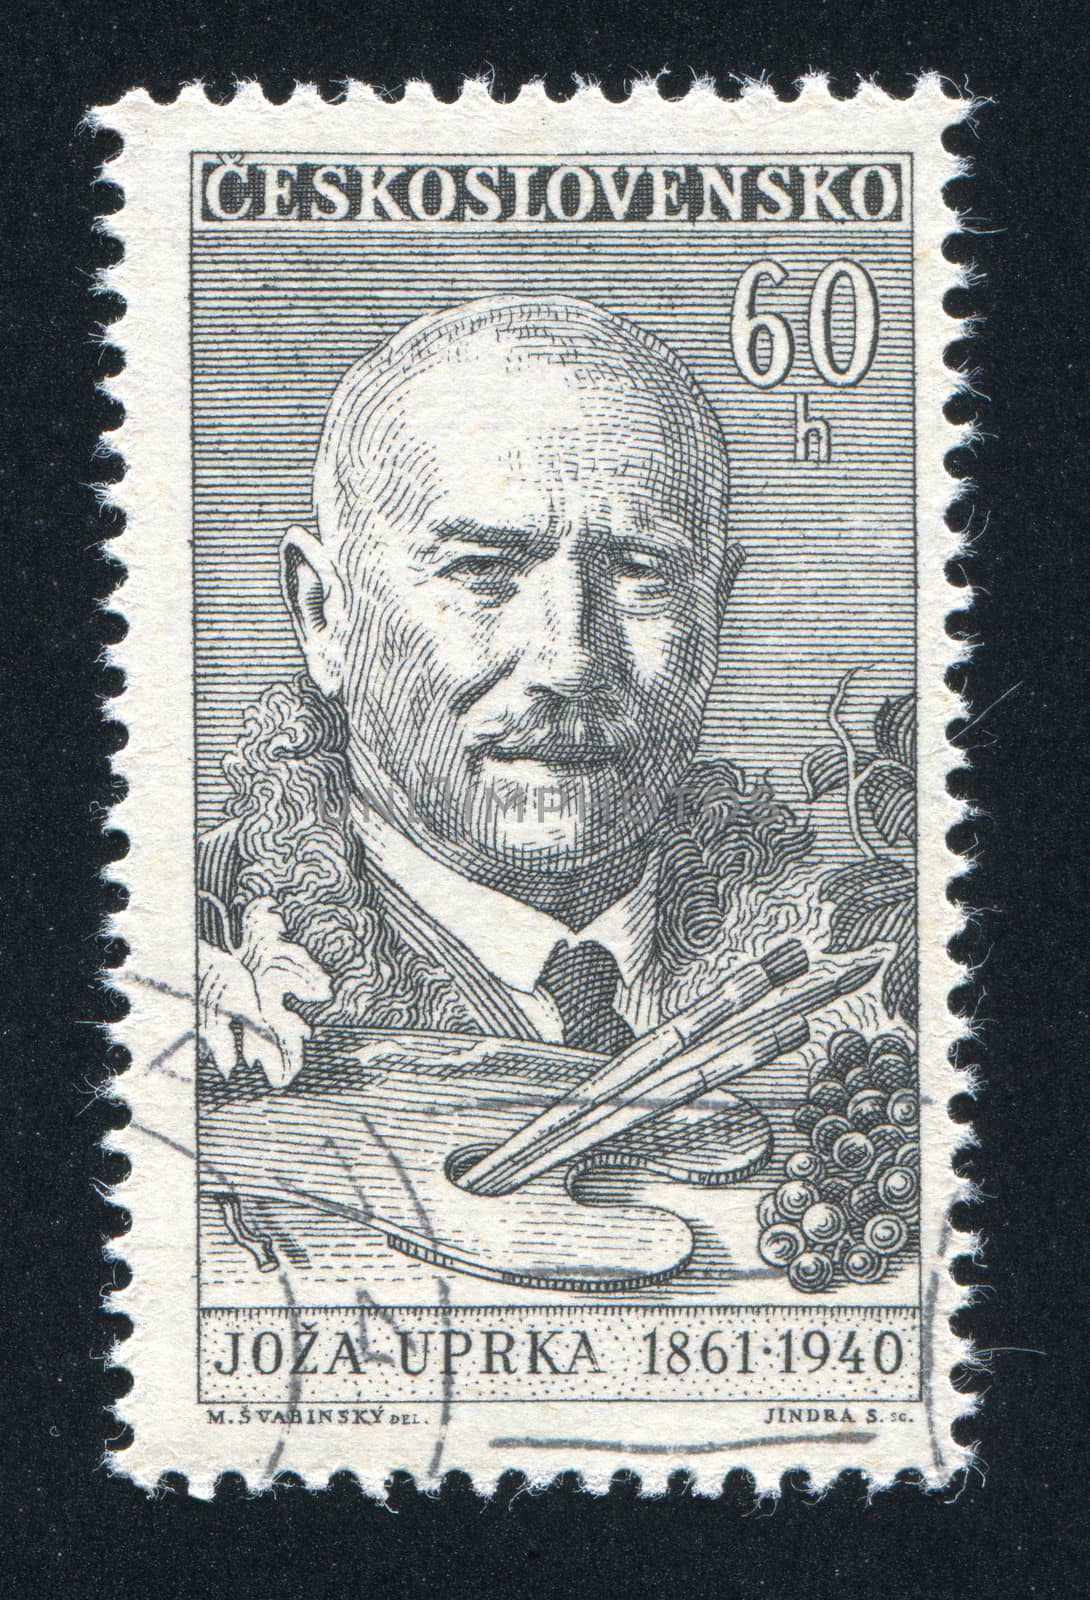 CZECHOSLOVAKIA - CIRCA 1961: stamp printed by Czechoslovakia, shows Joza Uprka, circa 1961